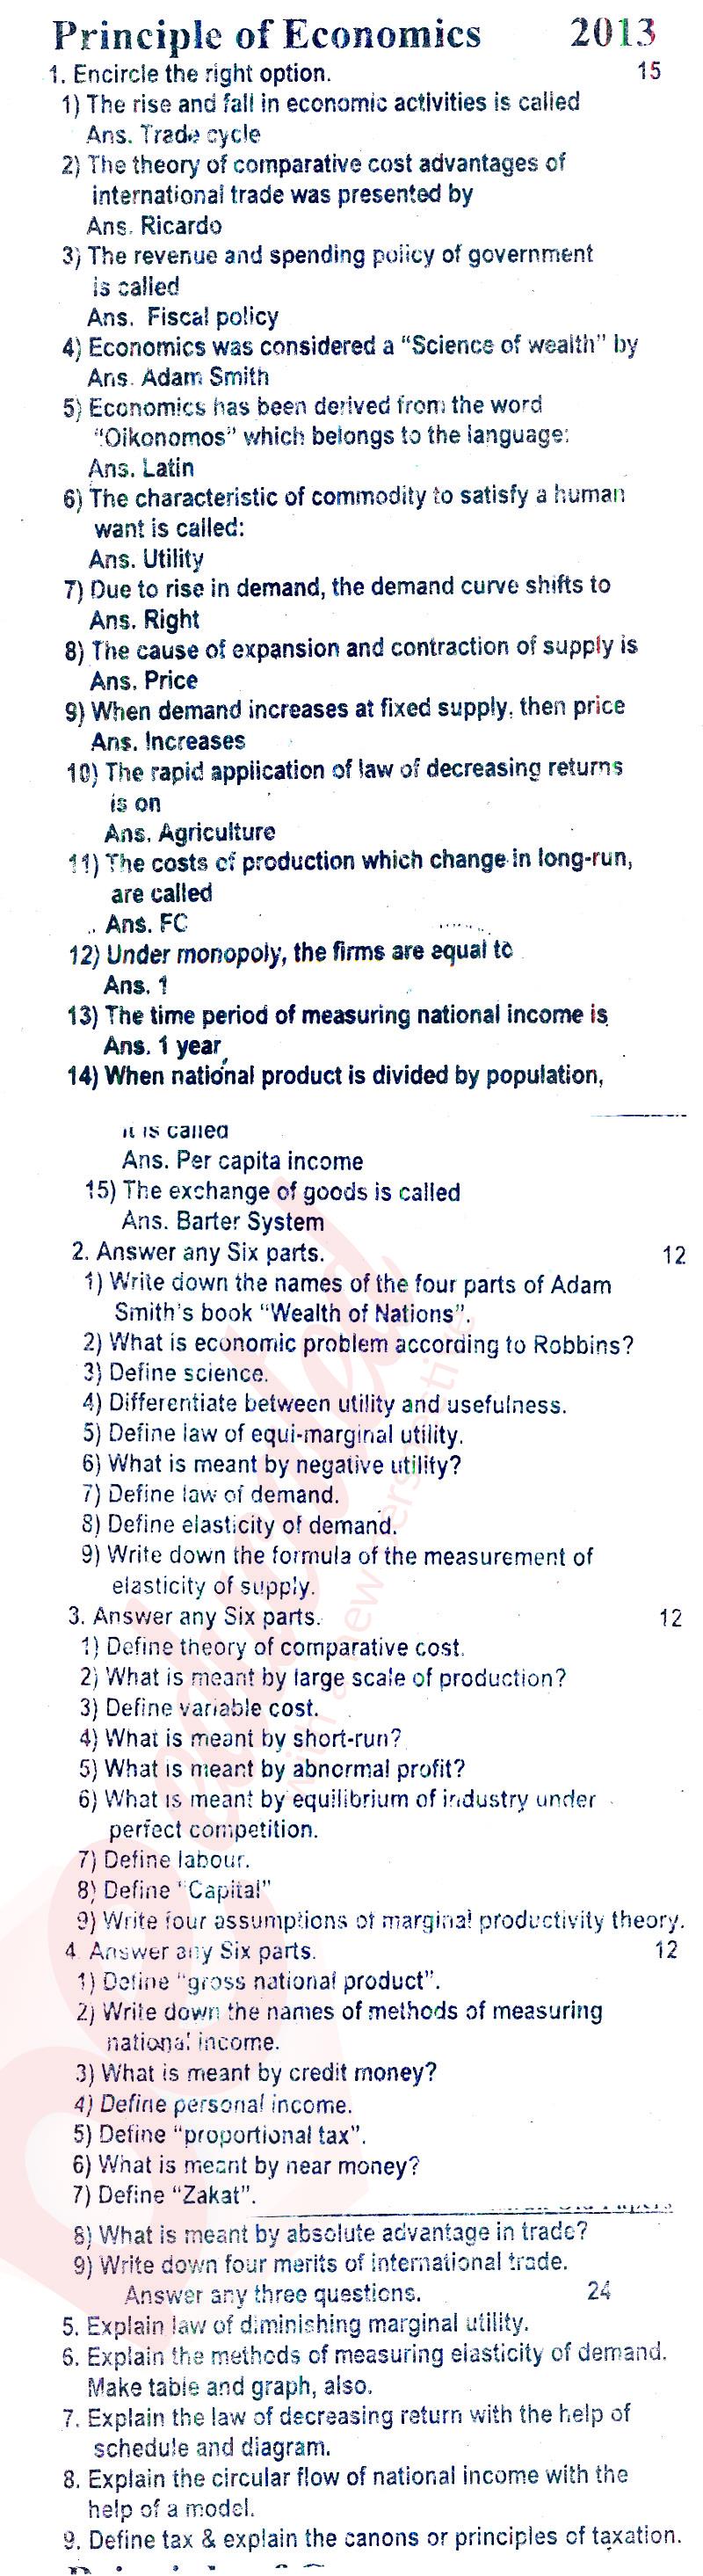 Principles of Economics ICOM Part 1 Past Paper Group 1 BISE Rawalpindi 2013